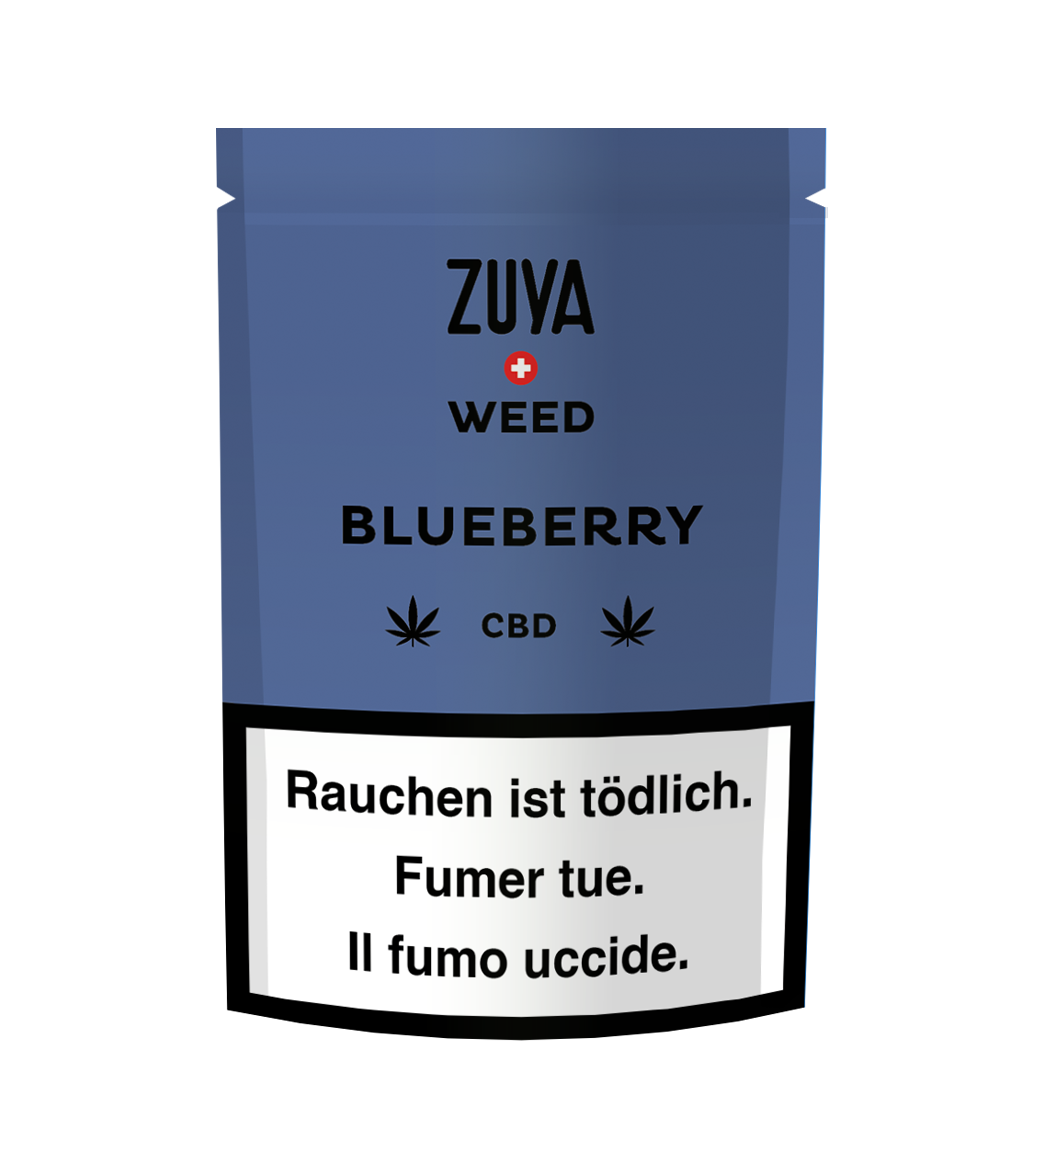 ZUYA Weed BLUEBERRY “on the go” - 2g